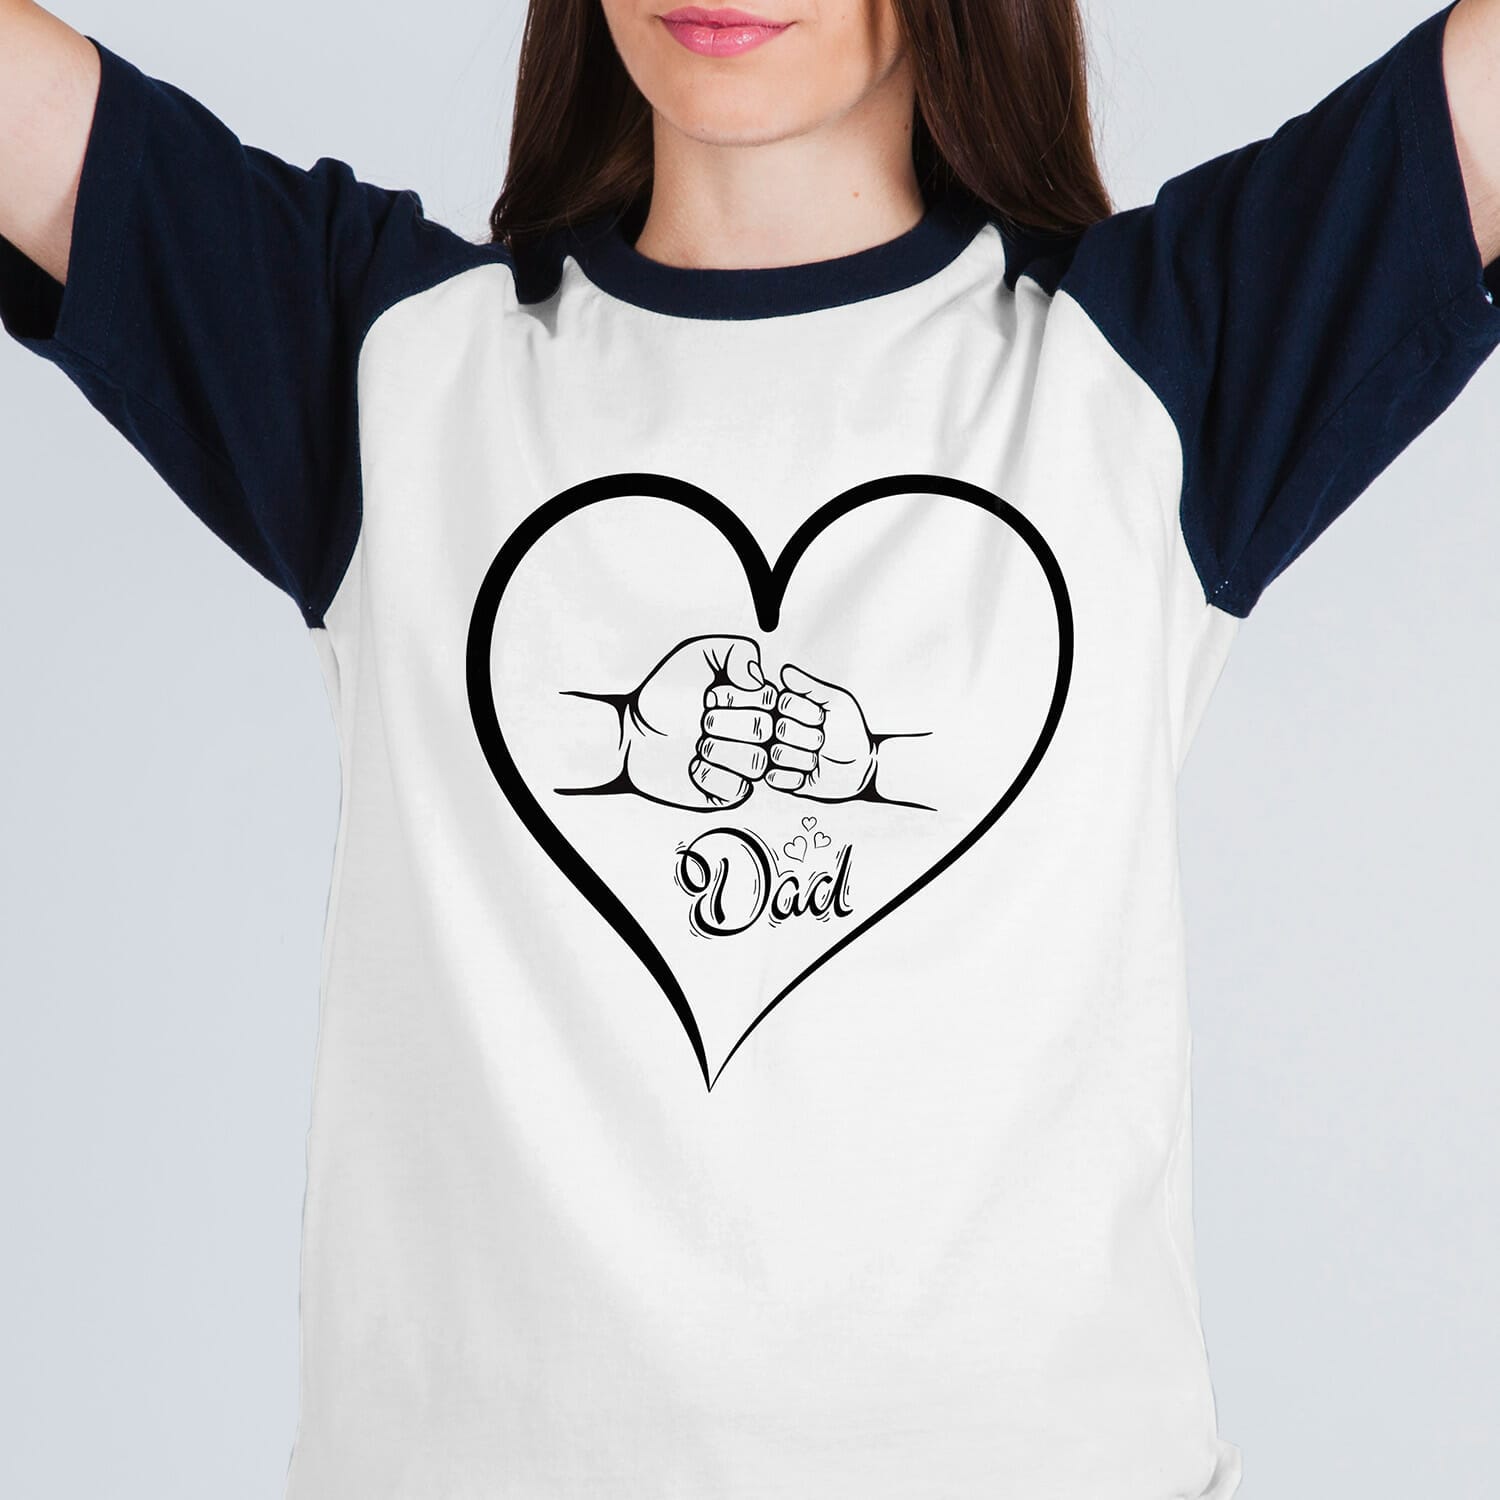 Dad love Heart Shaped t-shirt design